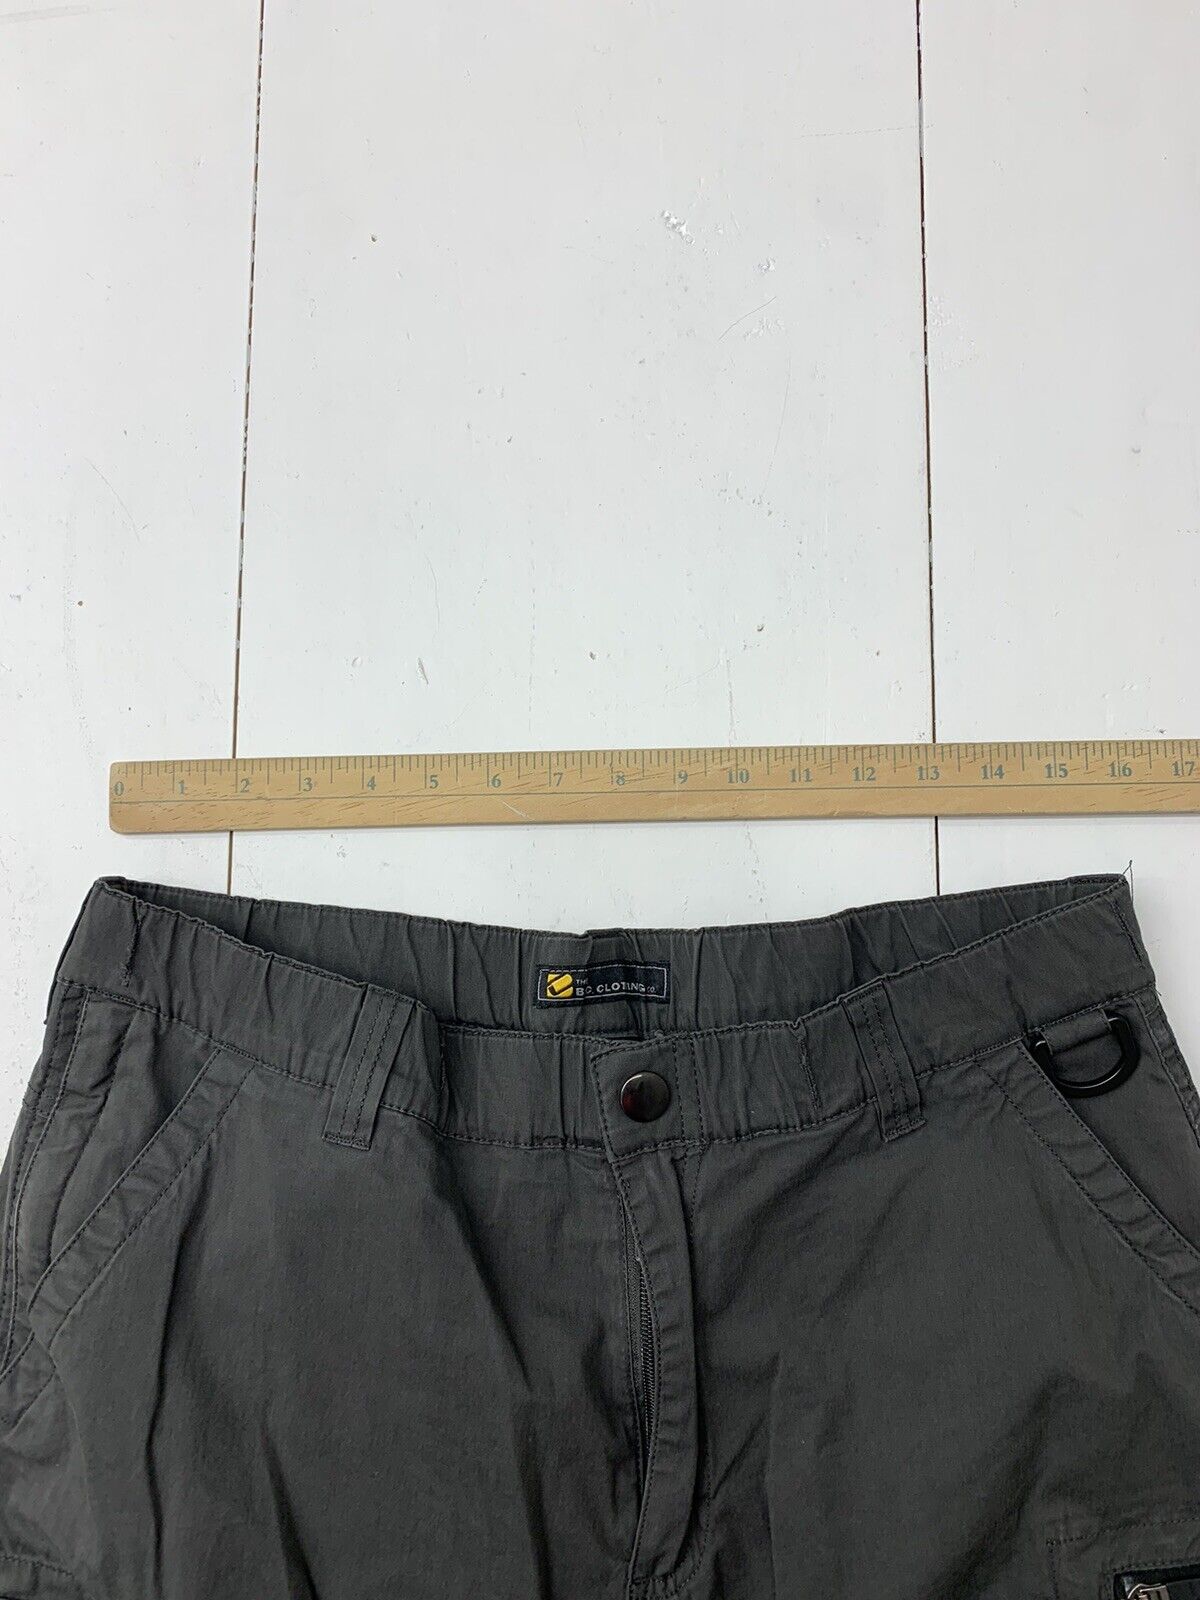 BC Clothing Mens Convertible Pant - Charcoal - Xxlx30